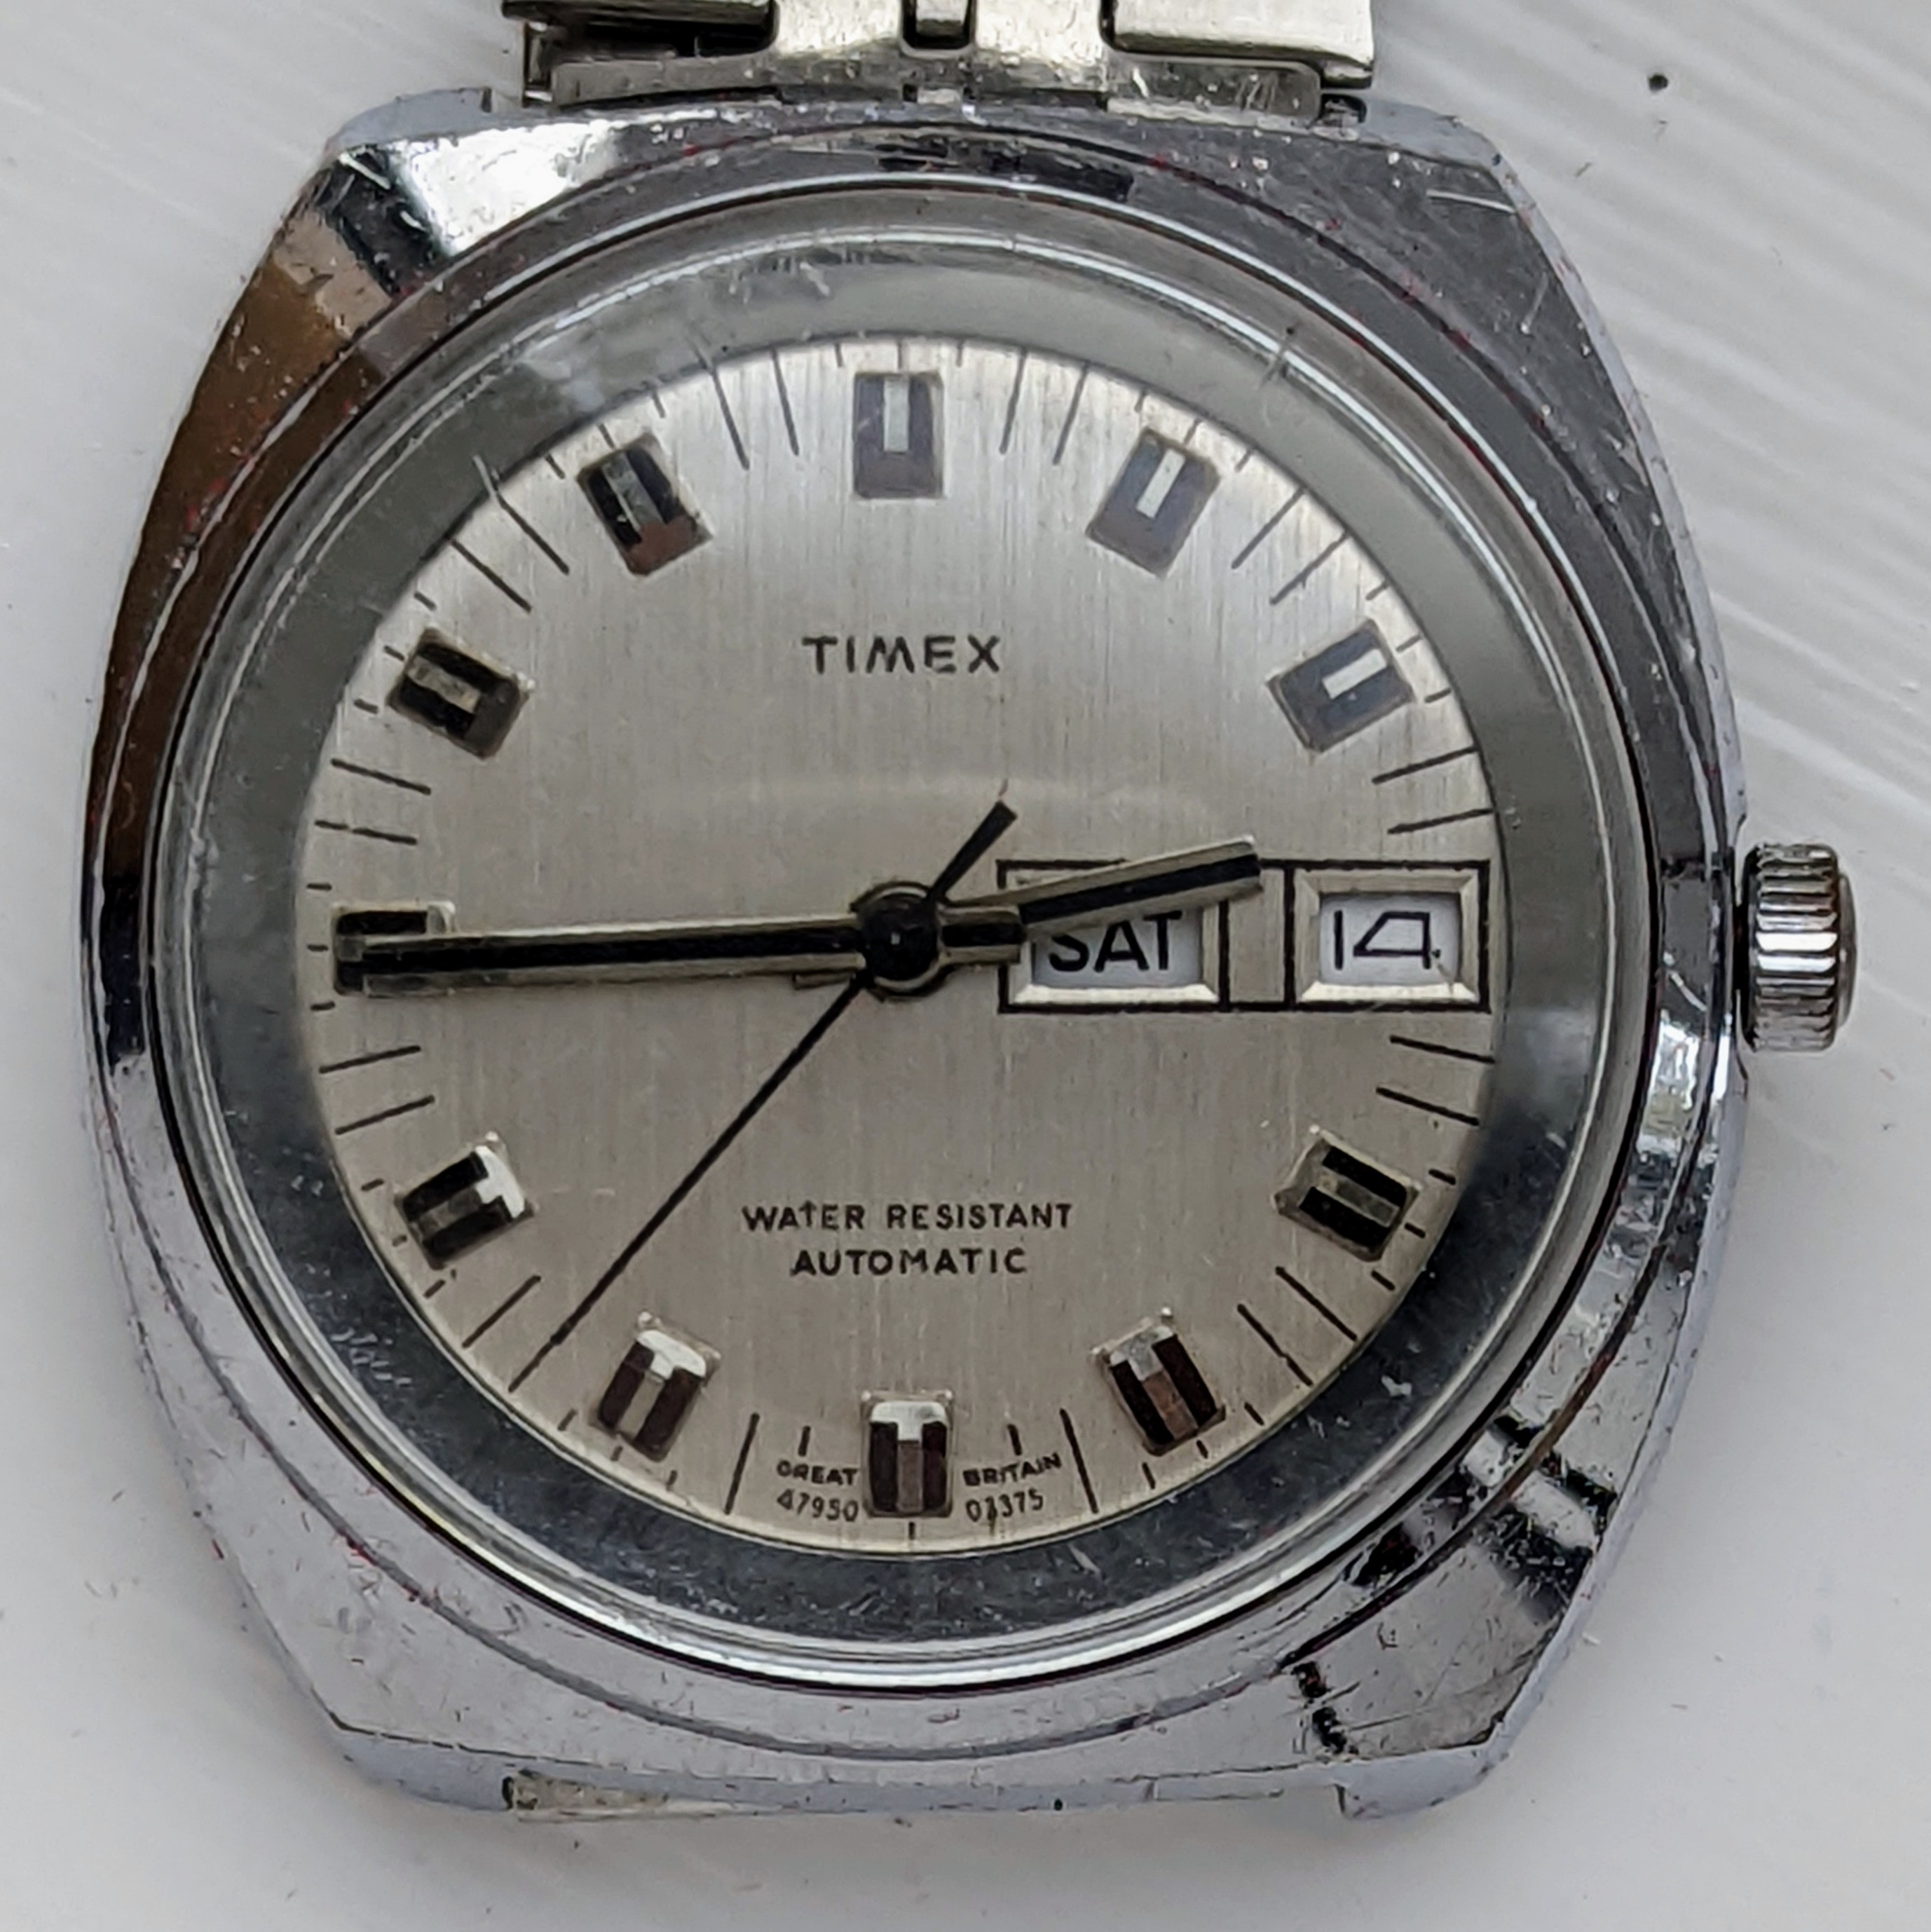 Timex Viscount 47950 03375 [1975]